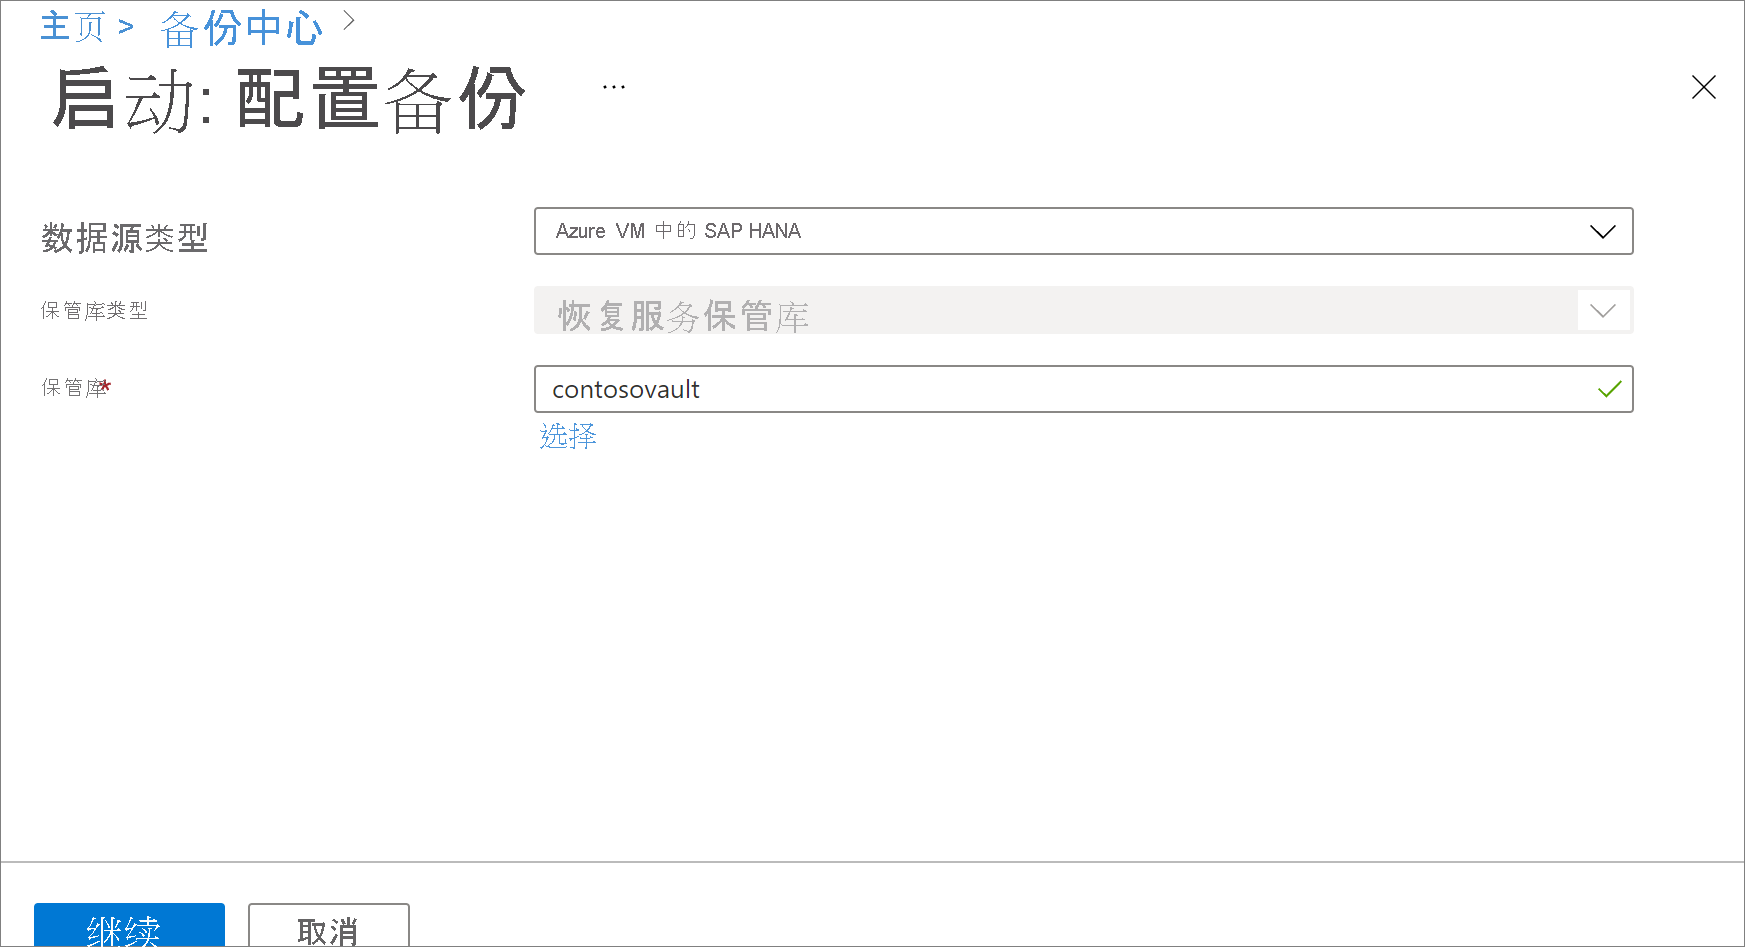 Screenshot that shows where to select SAP HANA in Azure VM as the datasource type.